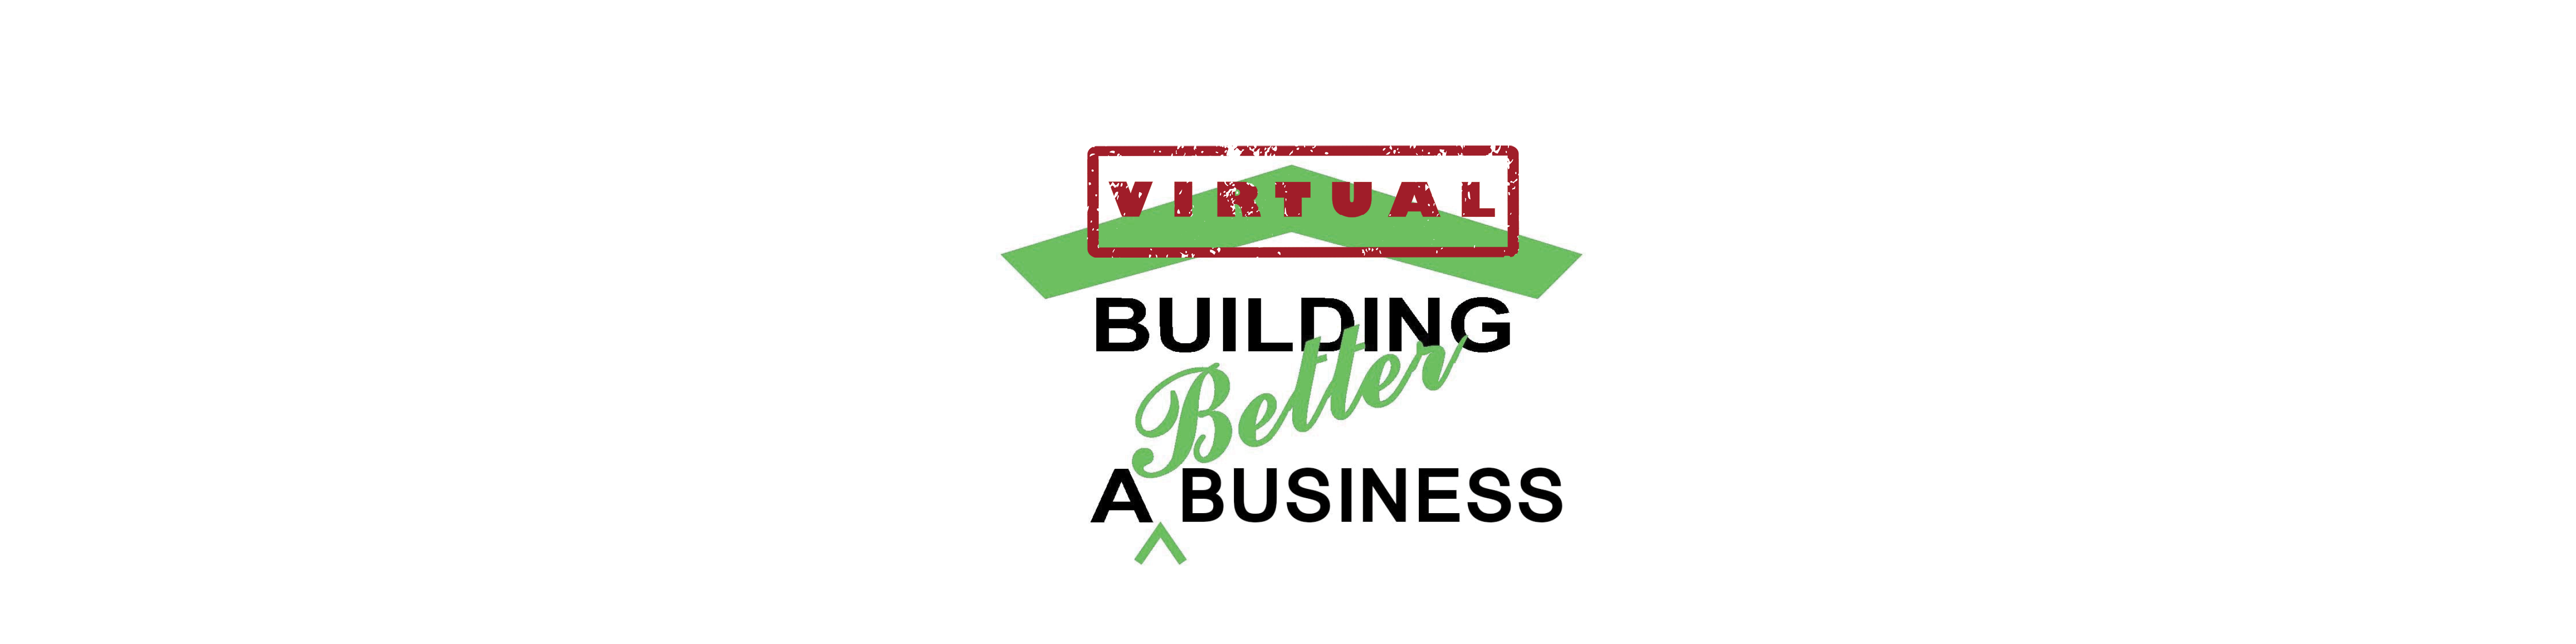 BBB Banner Virtual